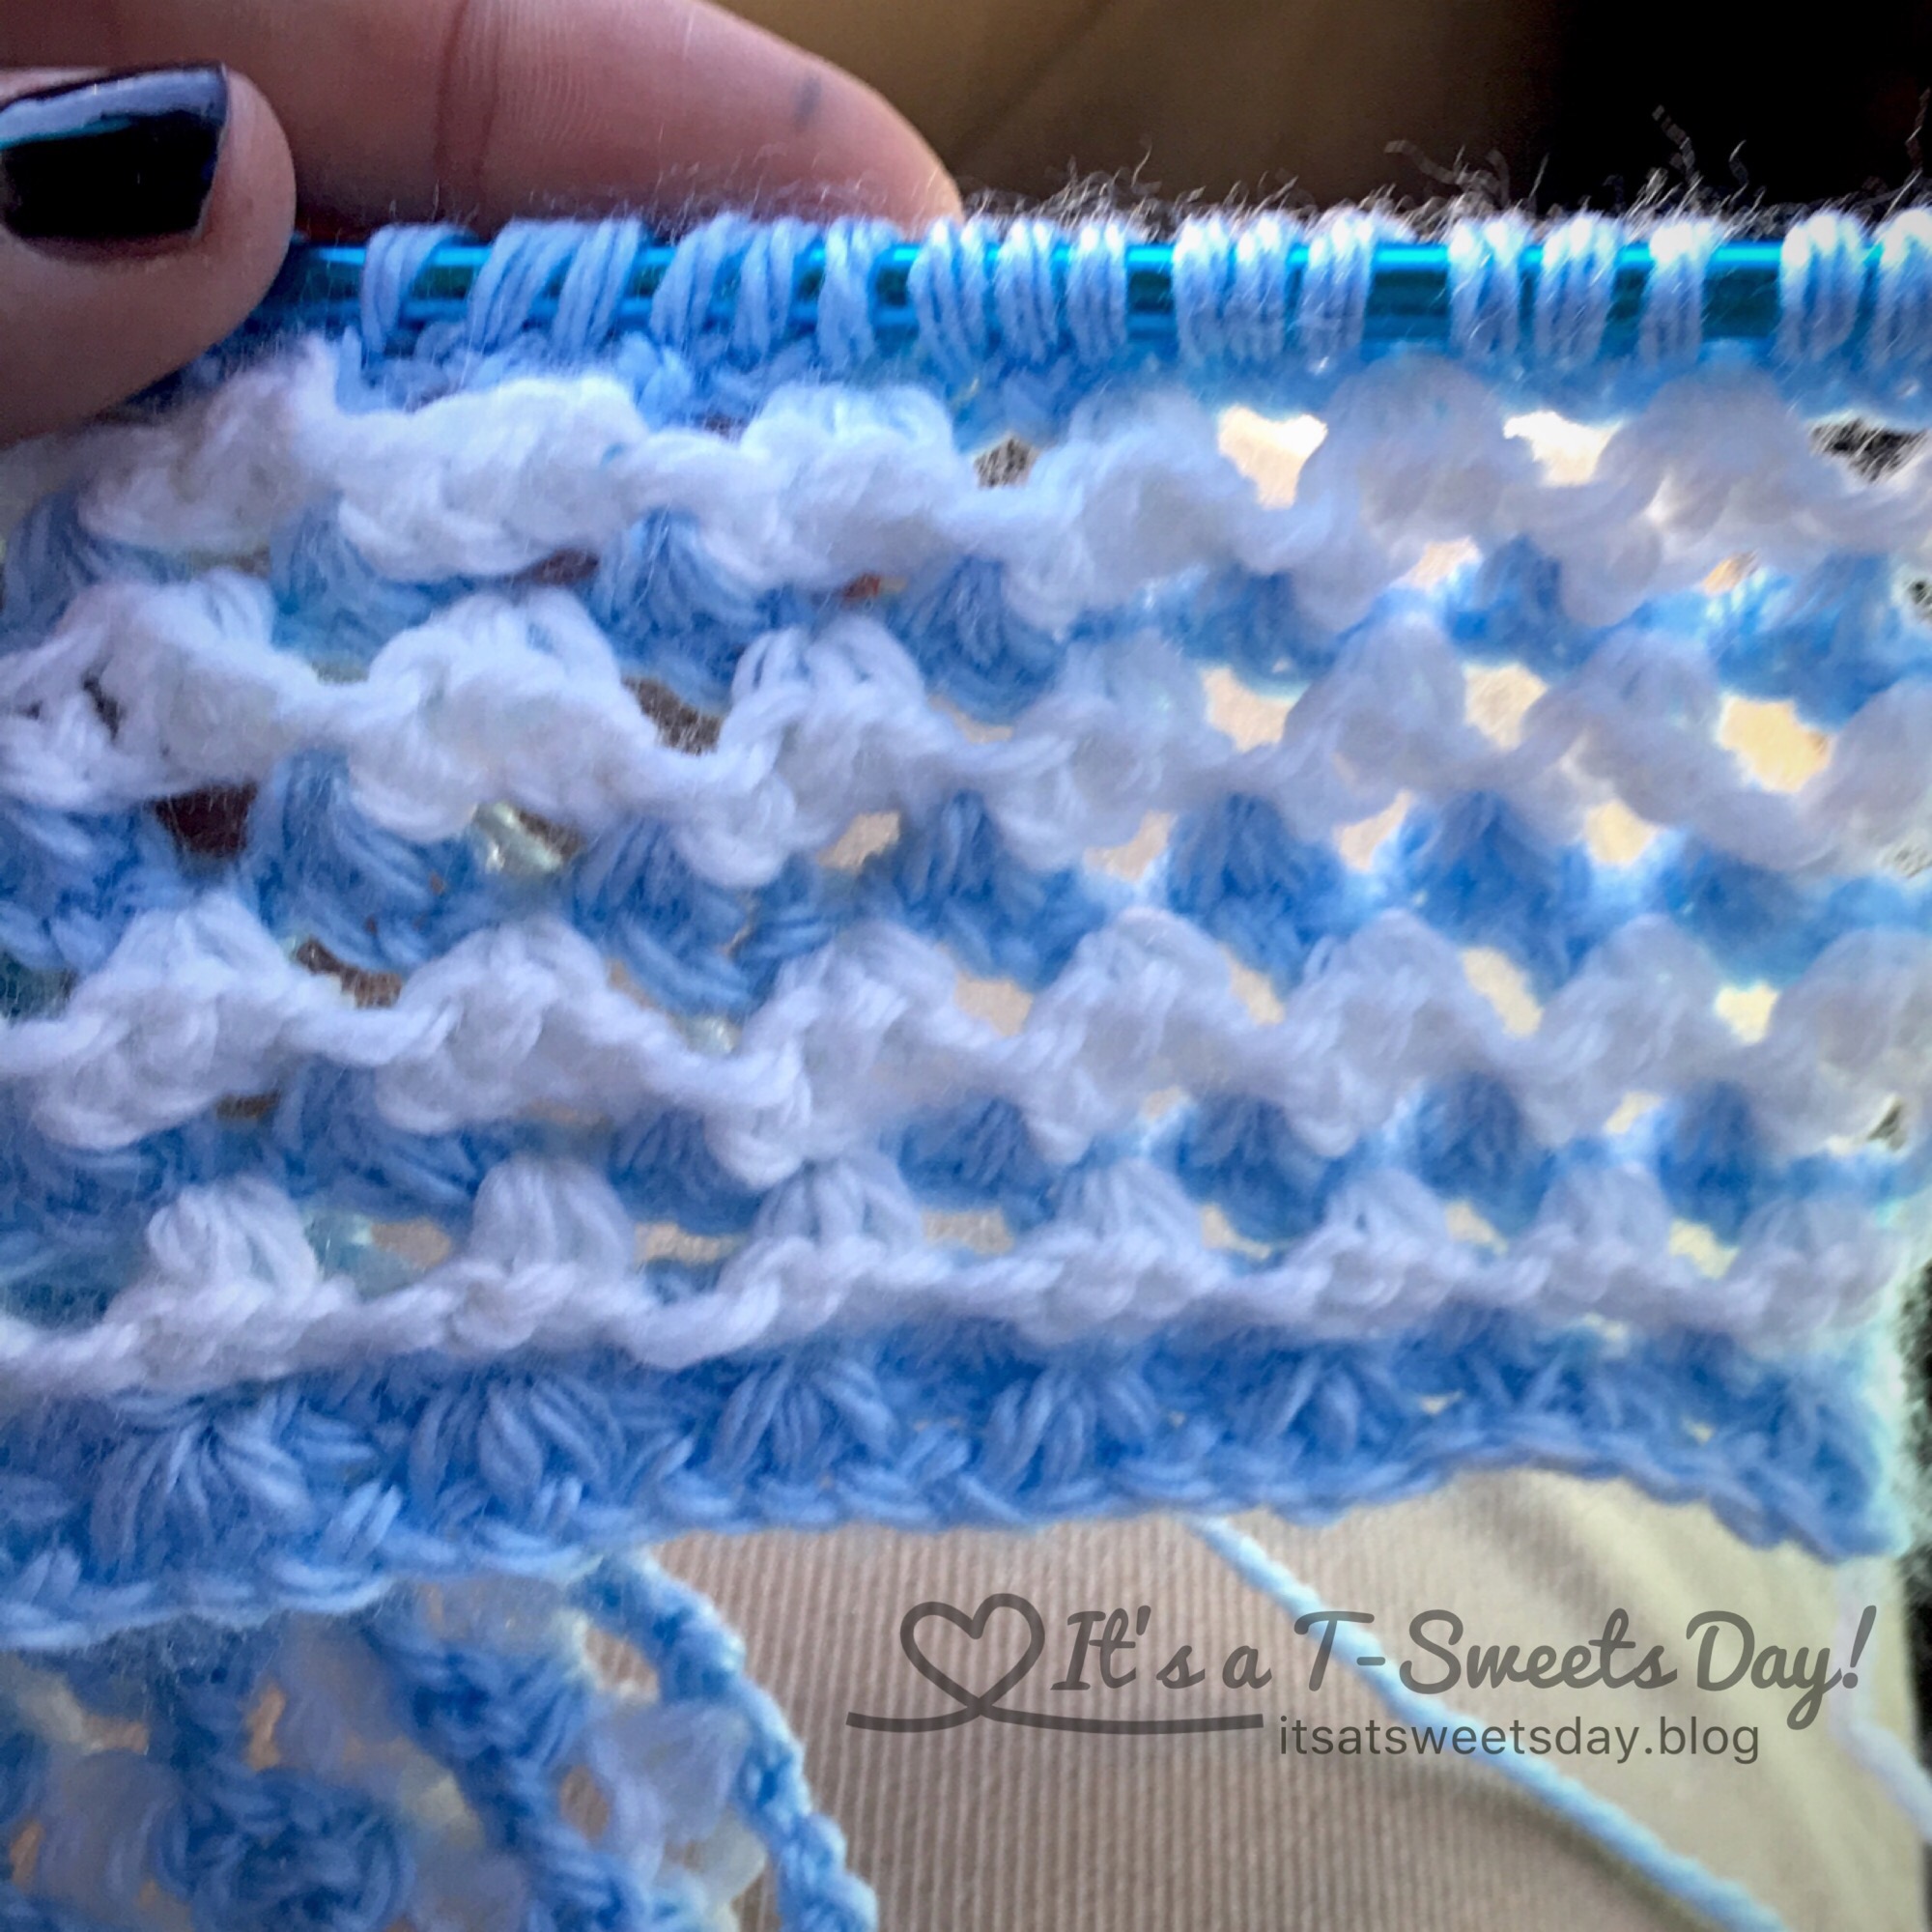 How to Make the Tunisian Sampler Bag - Free Tunisian Crochet